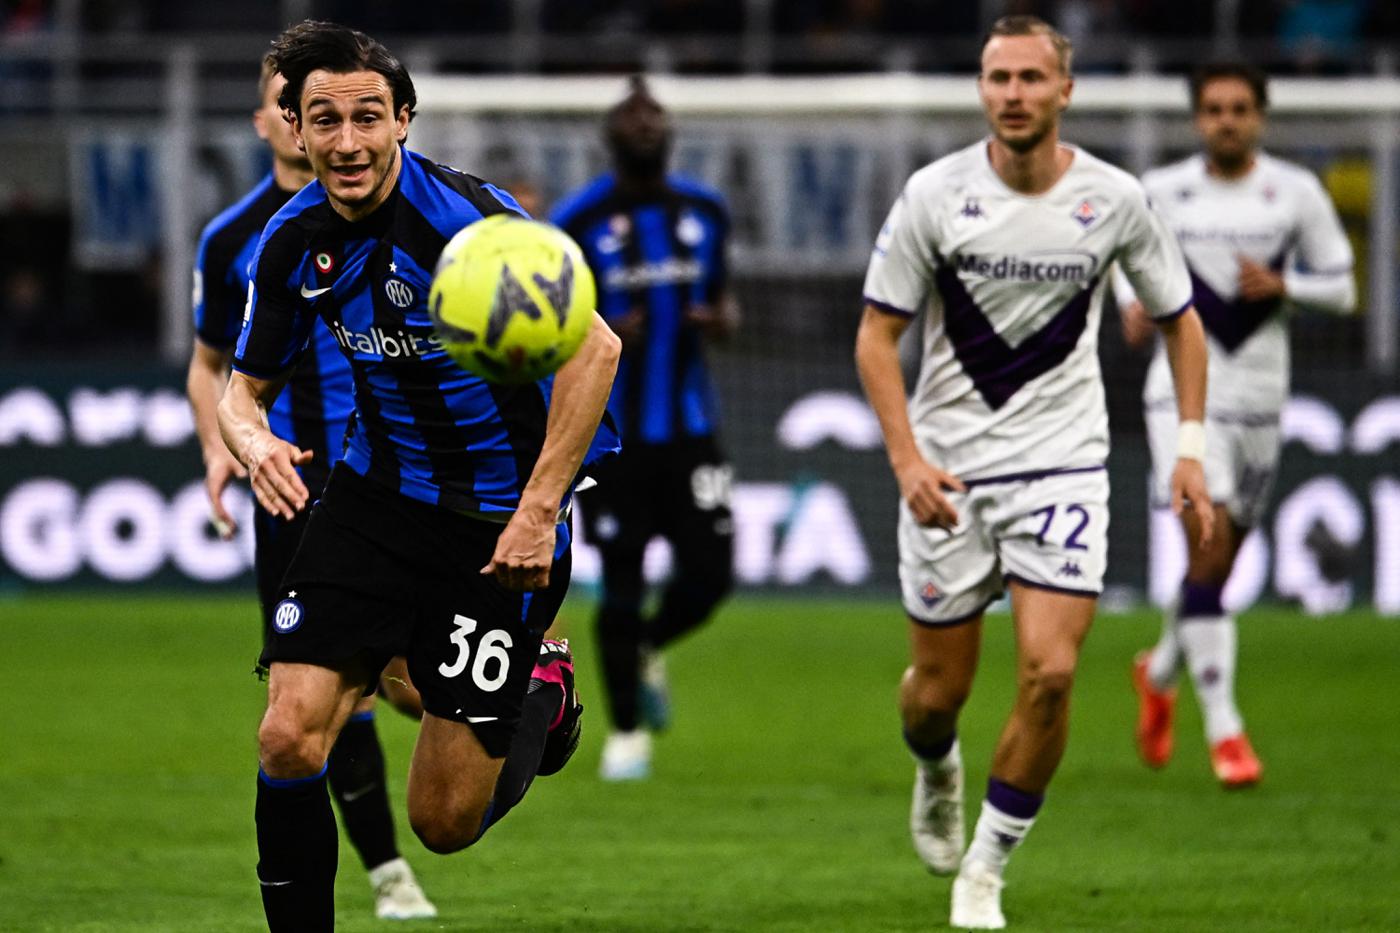 Inter - Fiorentina - 0:1. Italian Championship, 28th round. Match review, statistics